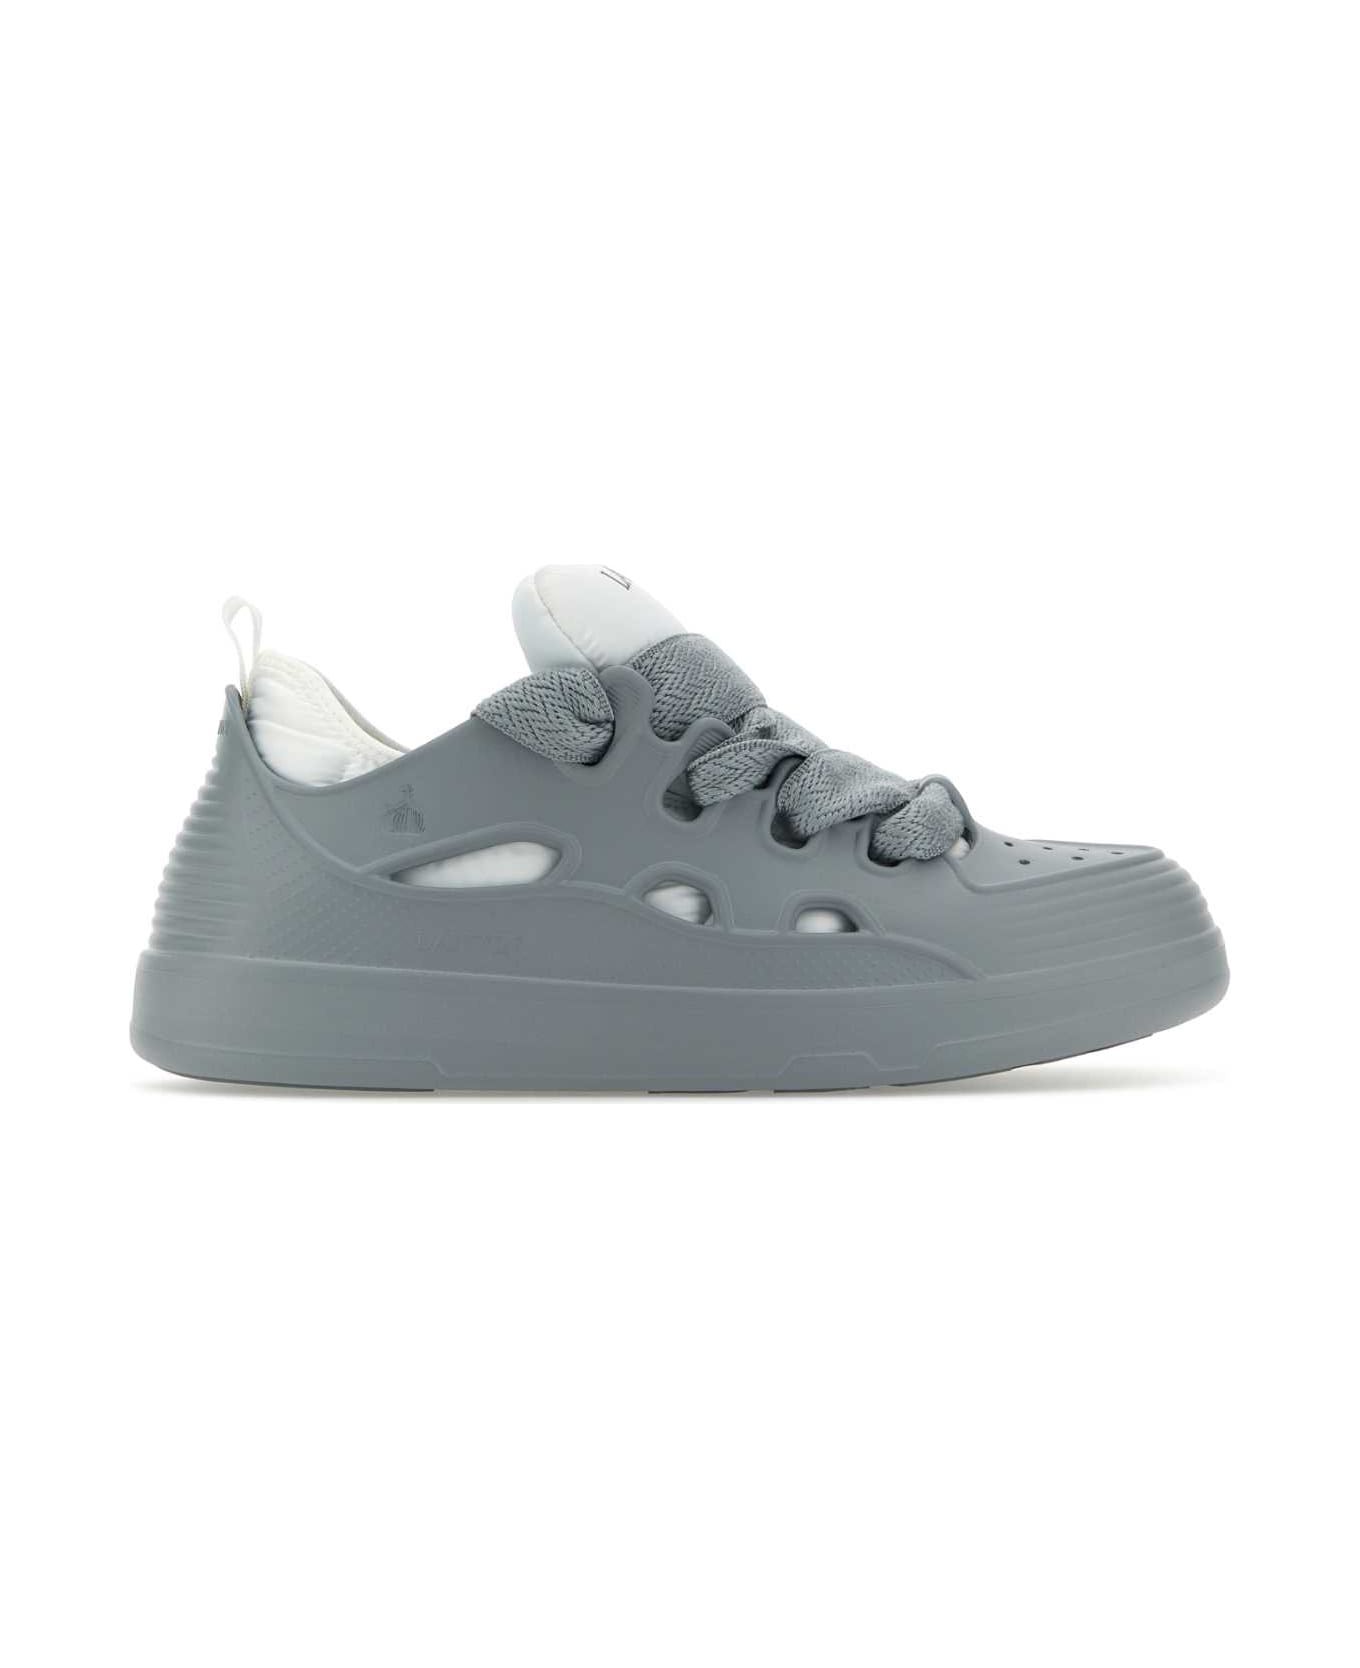 Lanvin Grey Rubber Curb Sneakers - PEARLGREY